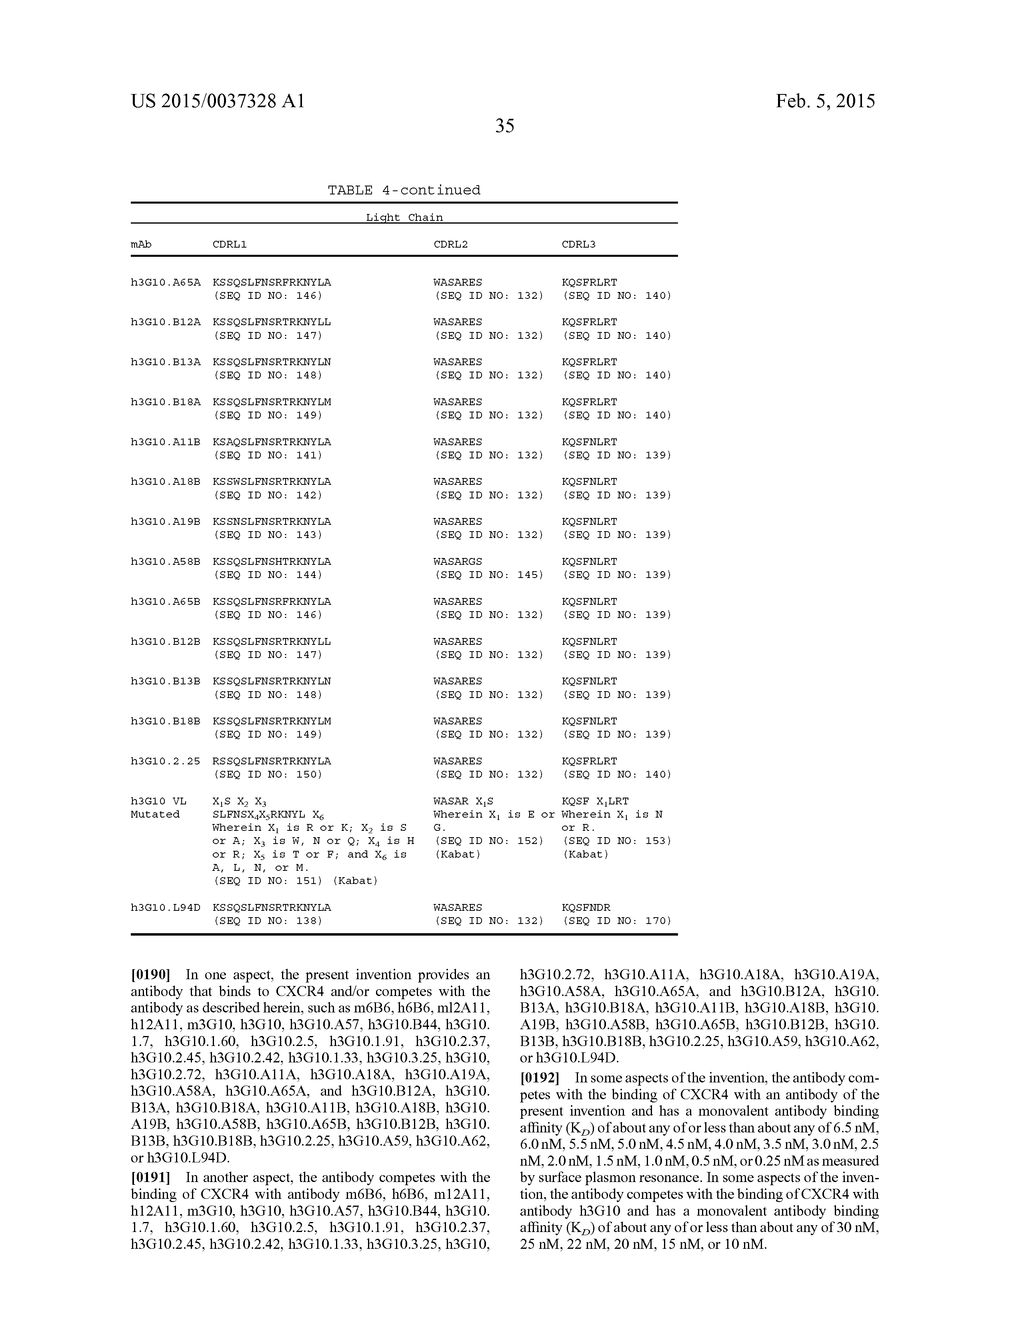 ANTI-CXCR4 ANTIBODIES AND ANTIBODY-DRUG CONJUGATES - diagram, schematic, and image 52